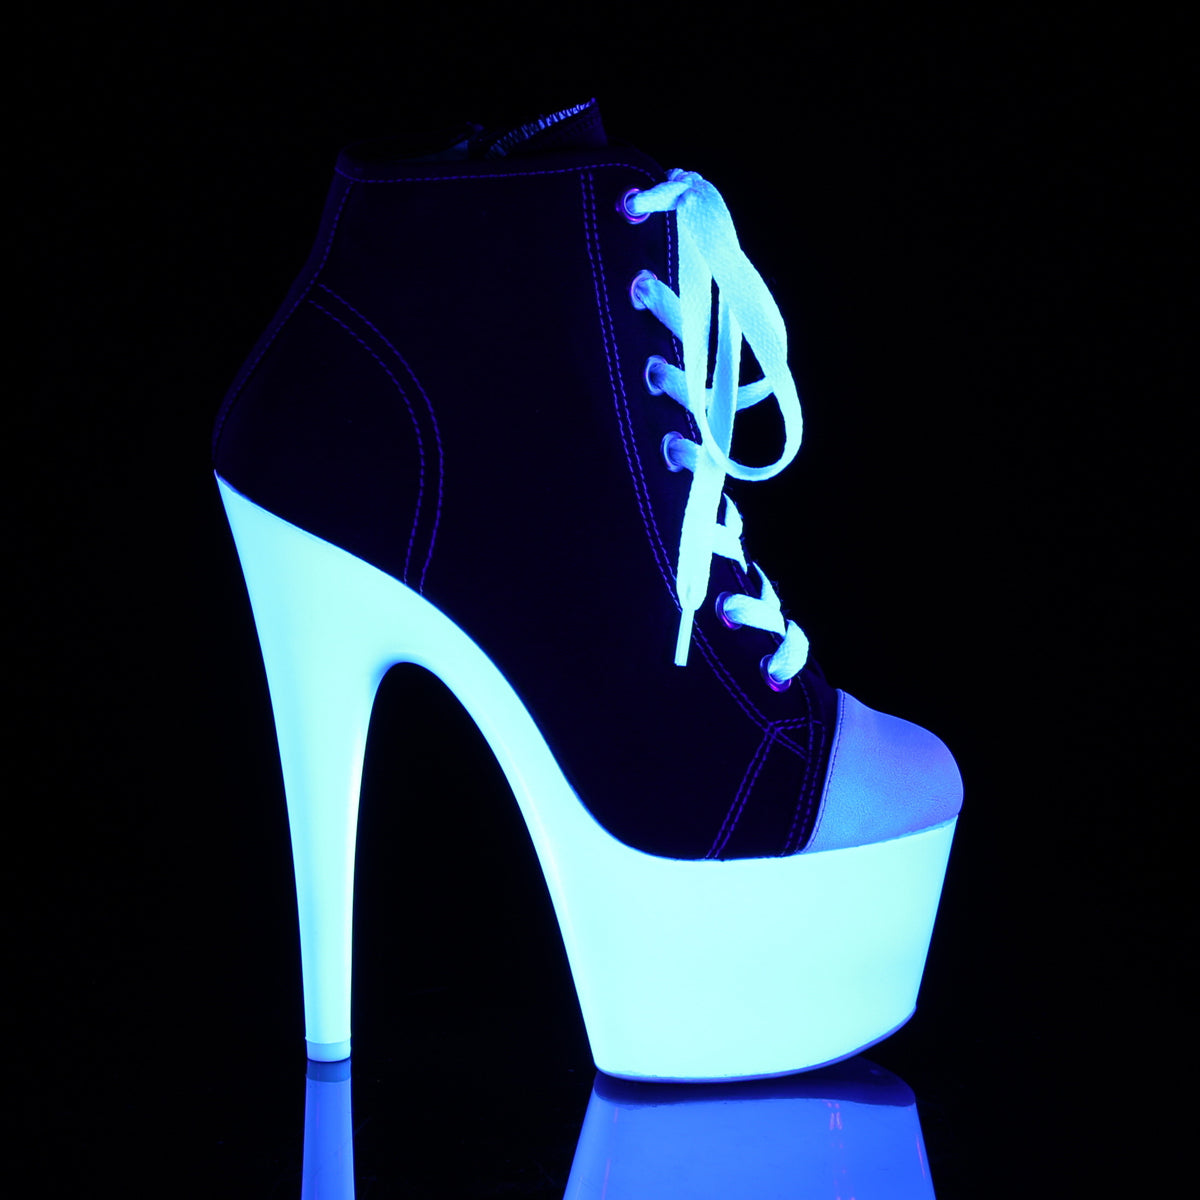 ADORE-700SK-02 Black Canvas/Neon White Sneaker Heels Pleaser